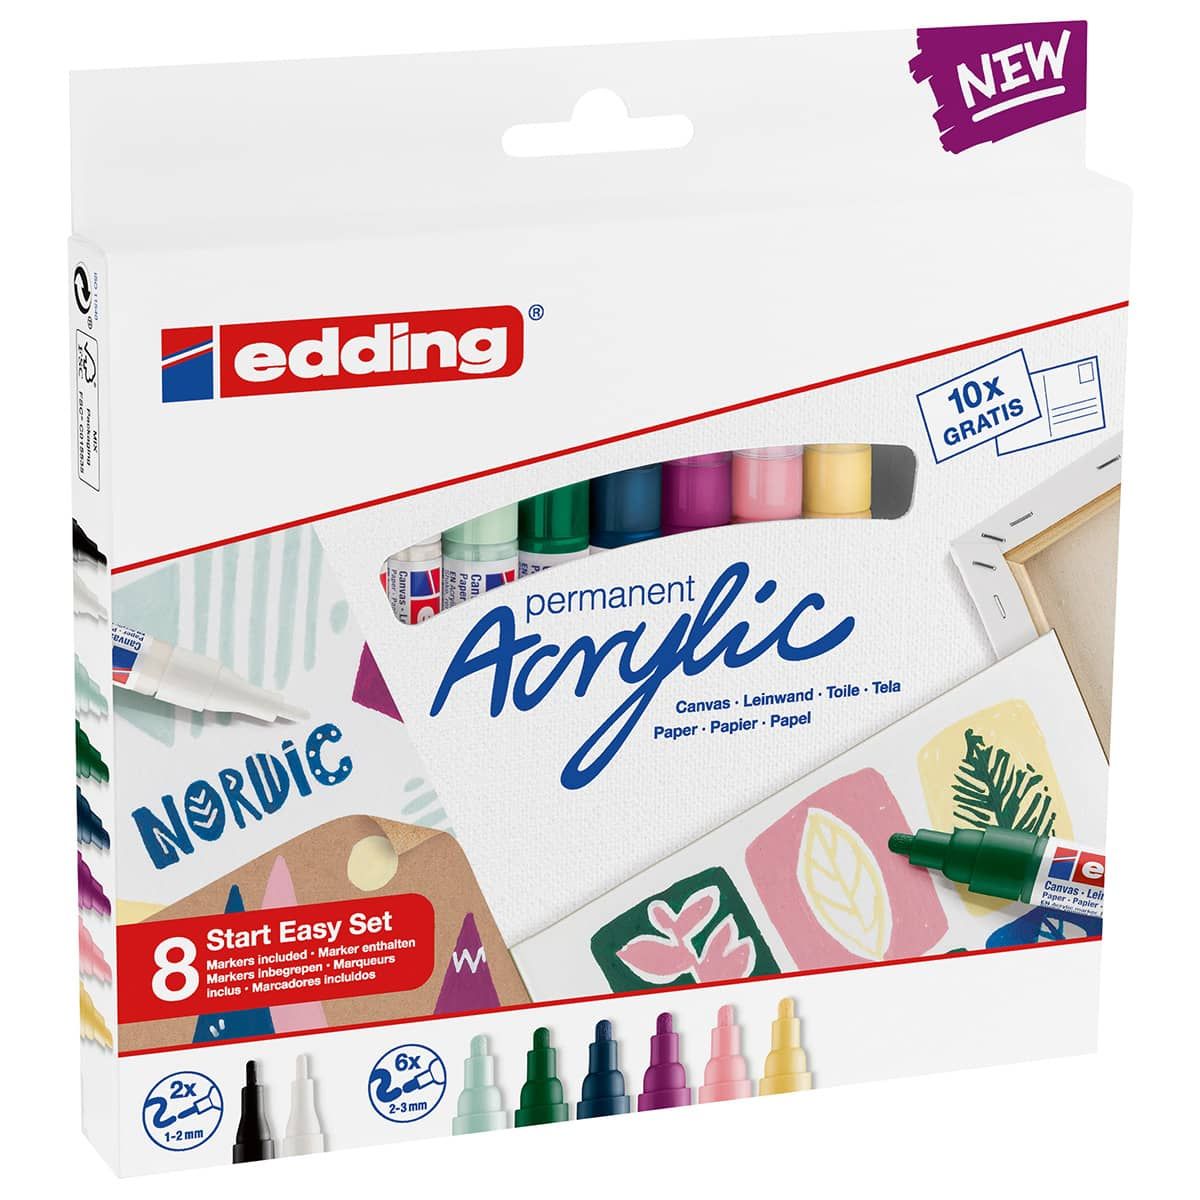 Edding Acrylic Marker Starter Set of 8 Nordic Colors